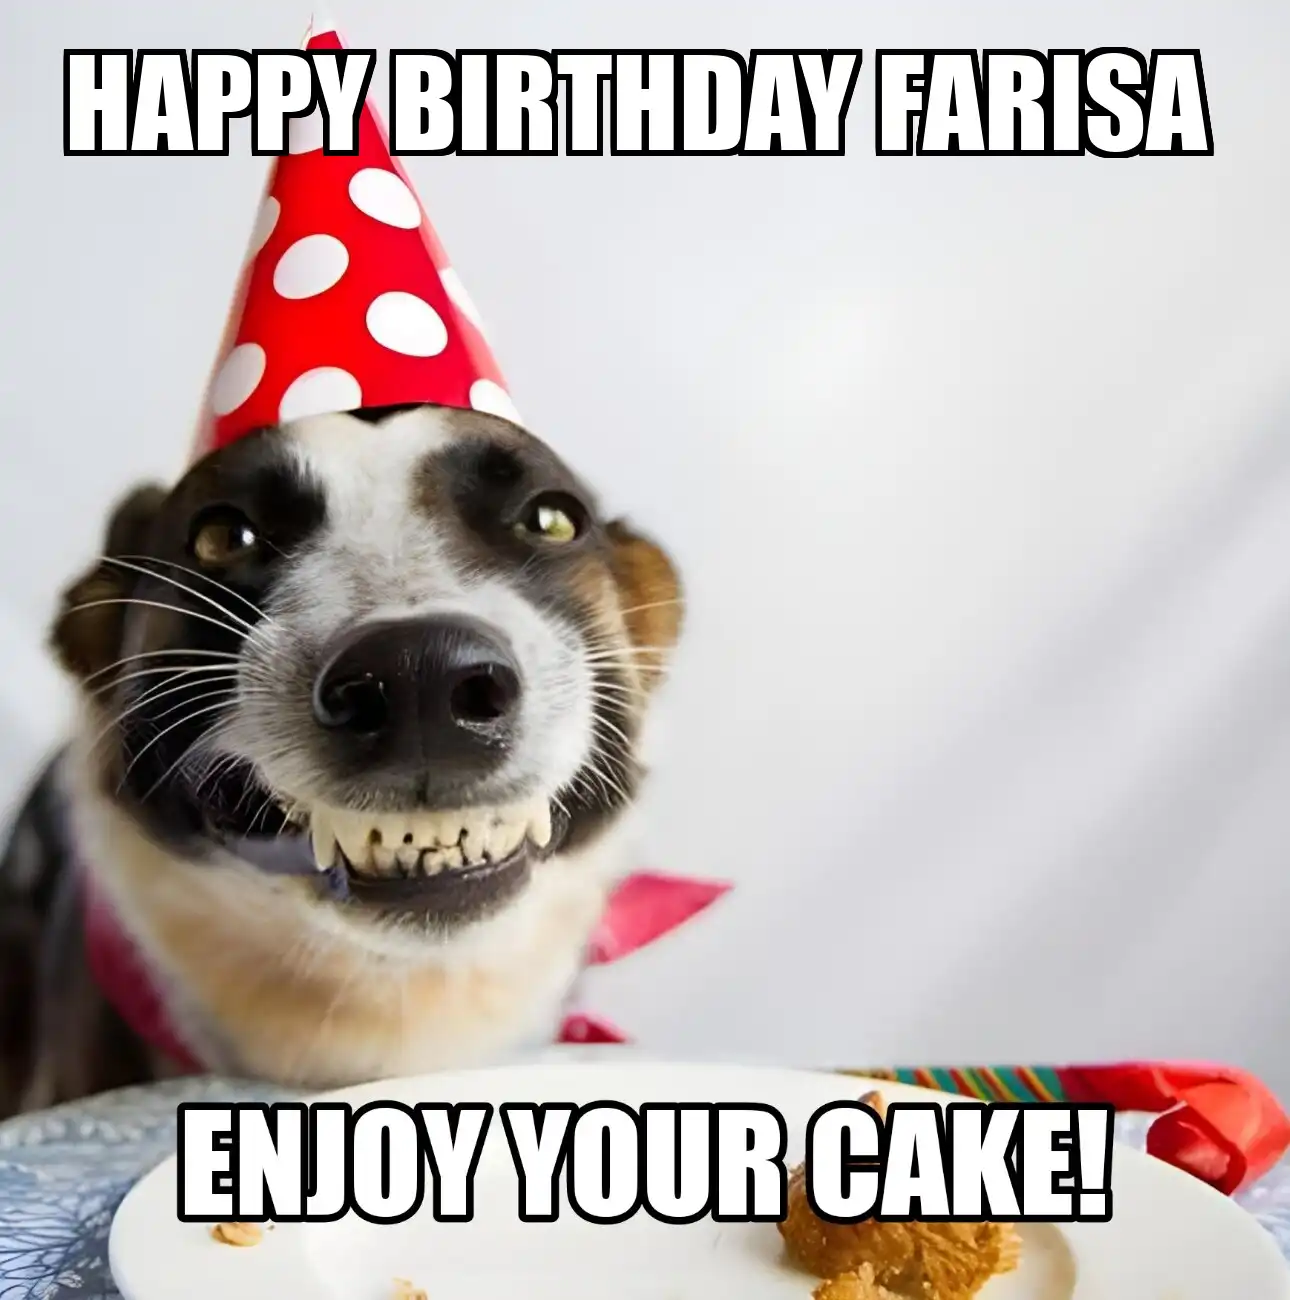 Happy Birthday Farisa Enjoy Your Cake Dog Meme